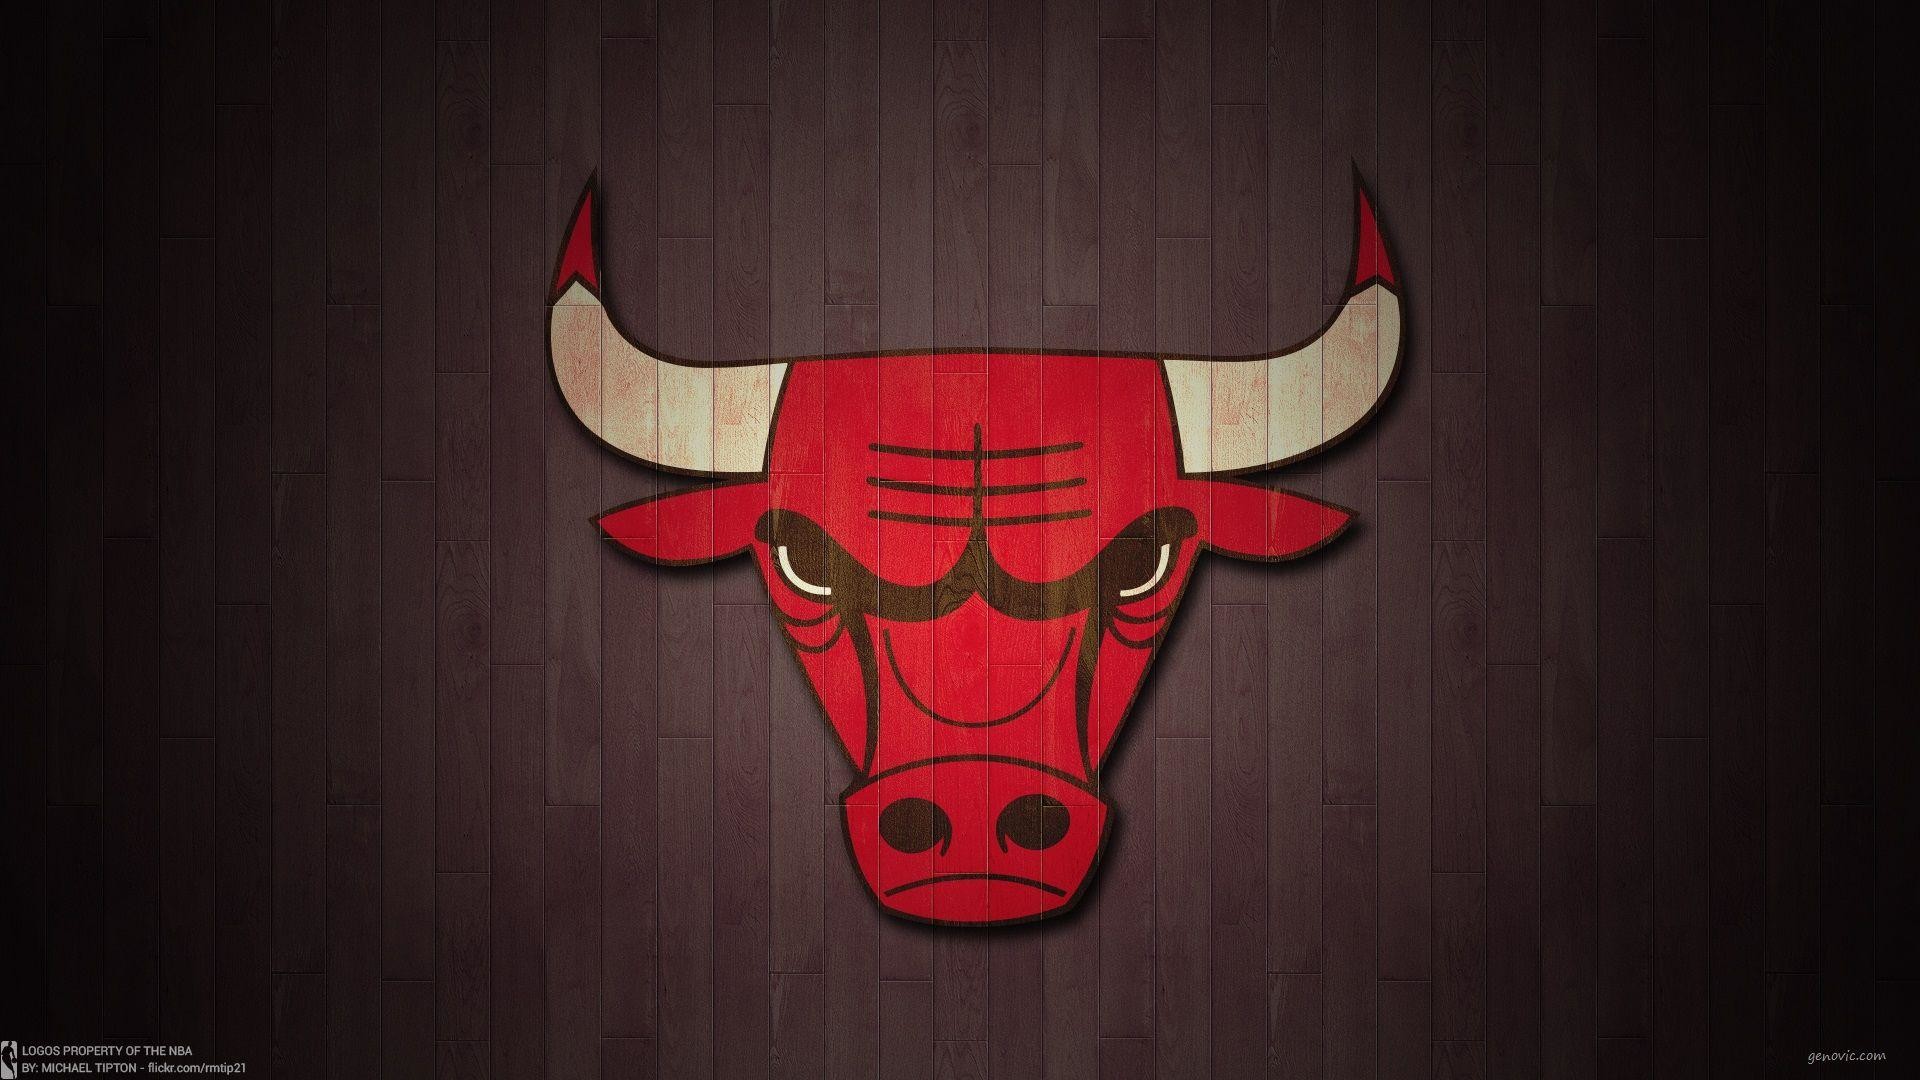 Chicago Bulls Logo Wallpaper HD for iPhone, Laptop, iPad, Mobile